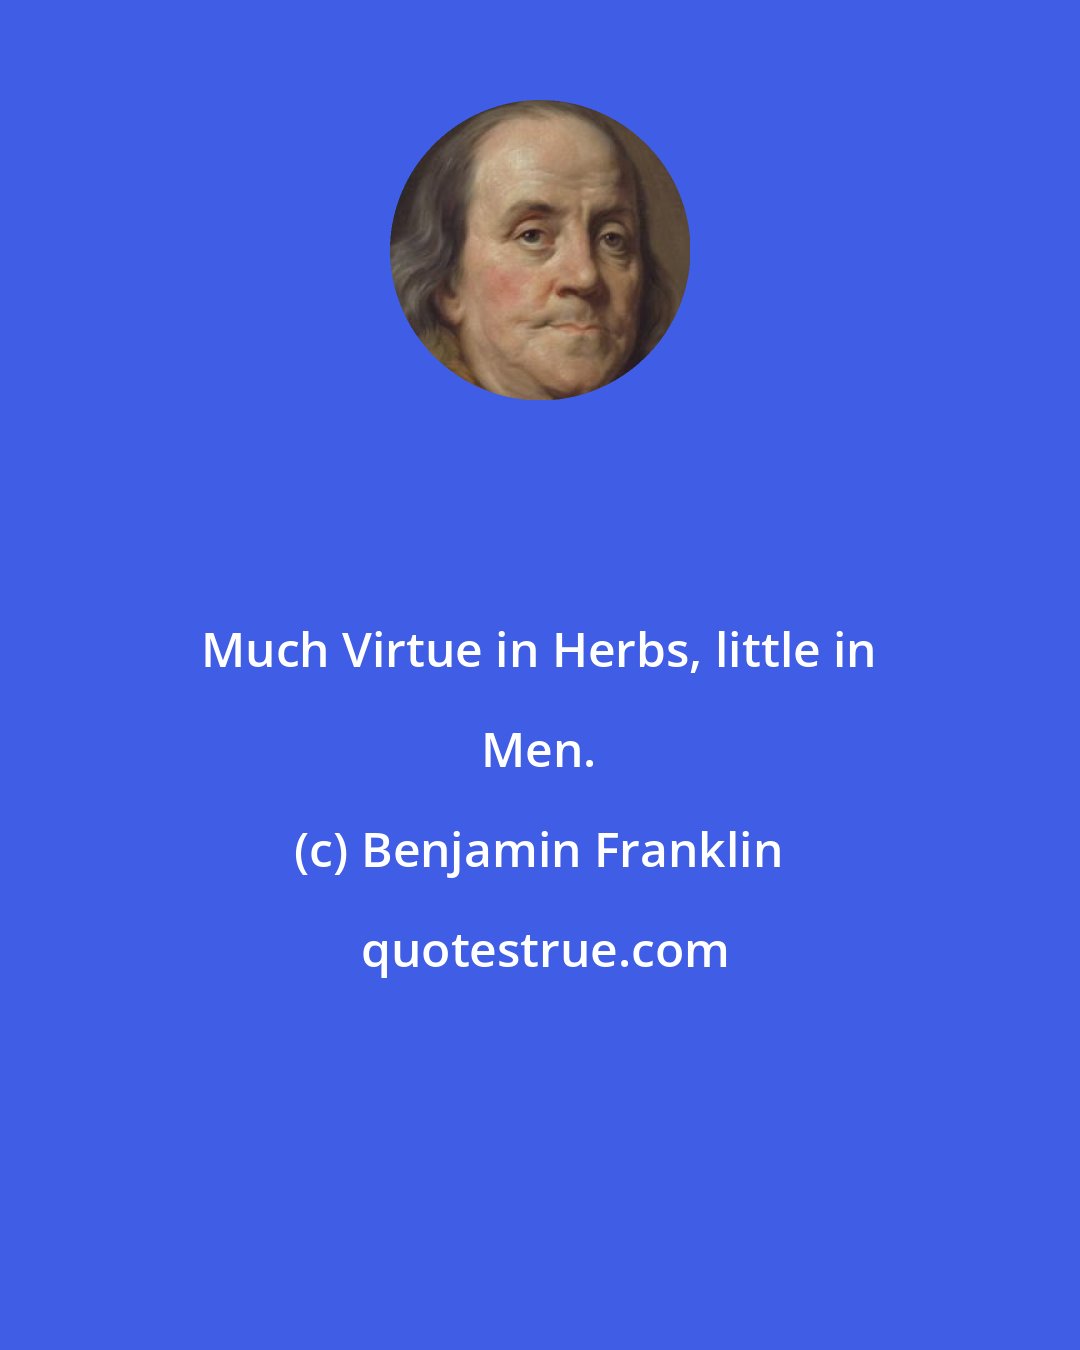 Benjamin Franklin: Much Virtue in Herbs, little in Men.